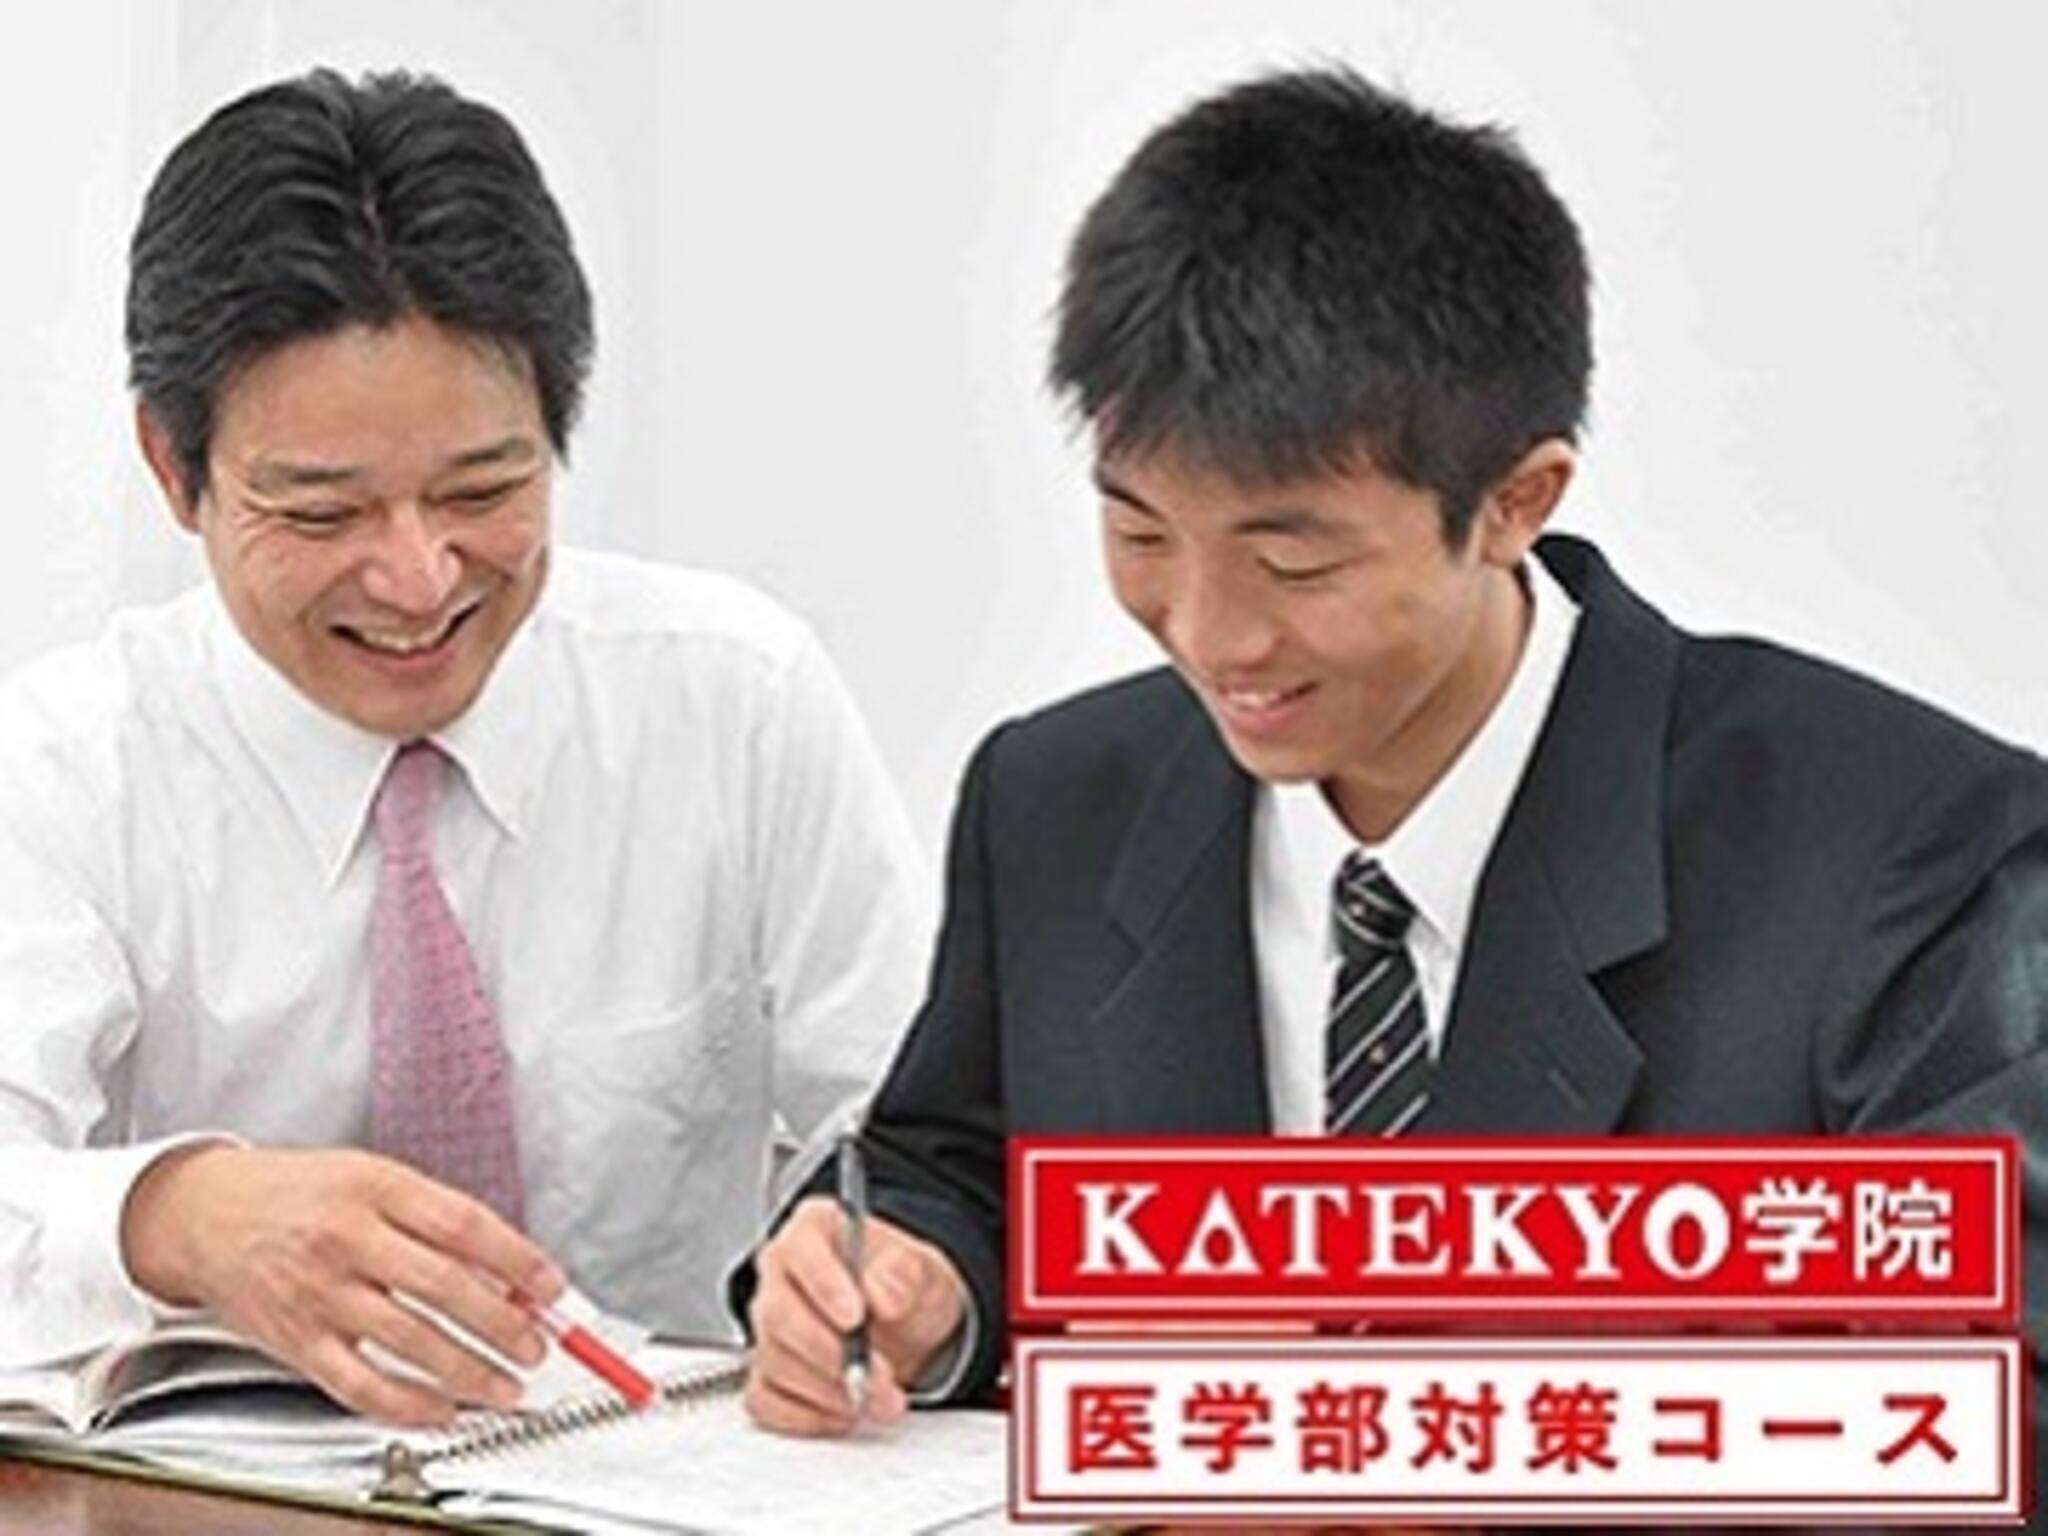 KATEKYO学院 医学部対策コース 相馬駅前校の代表写真4